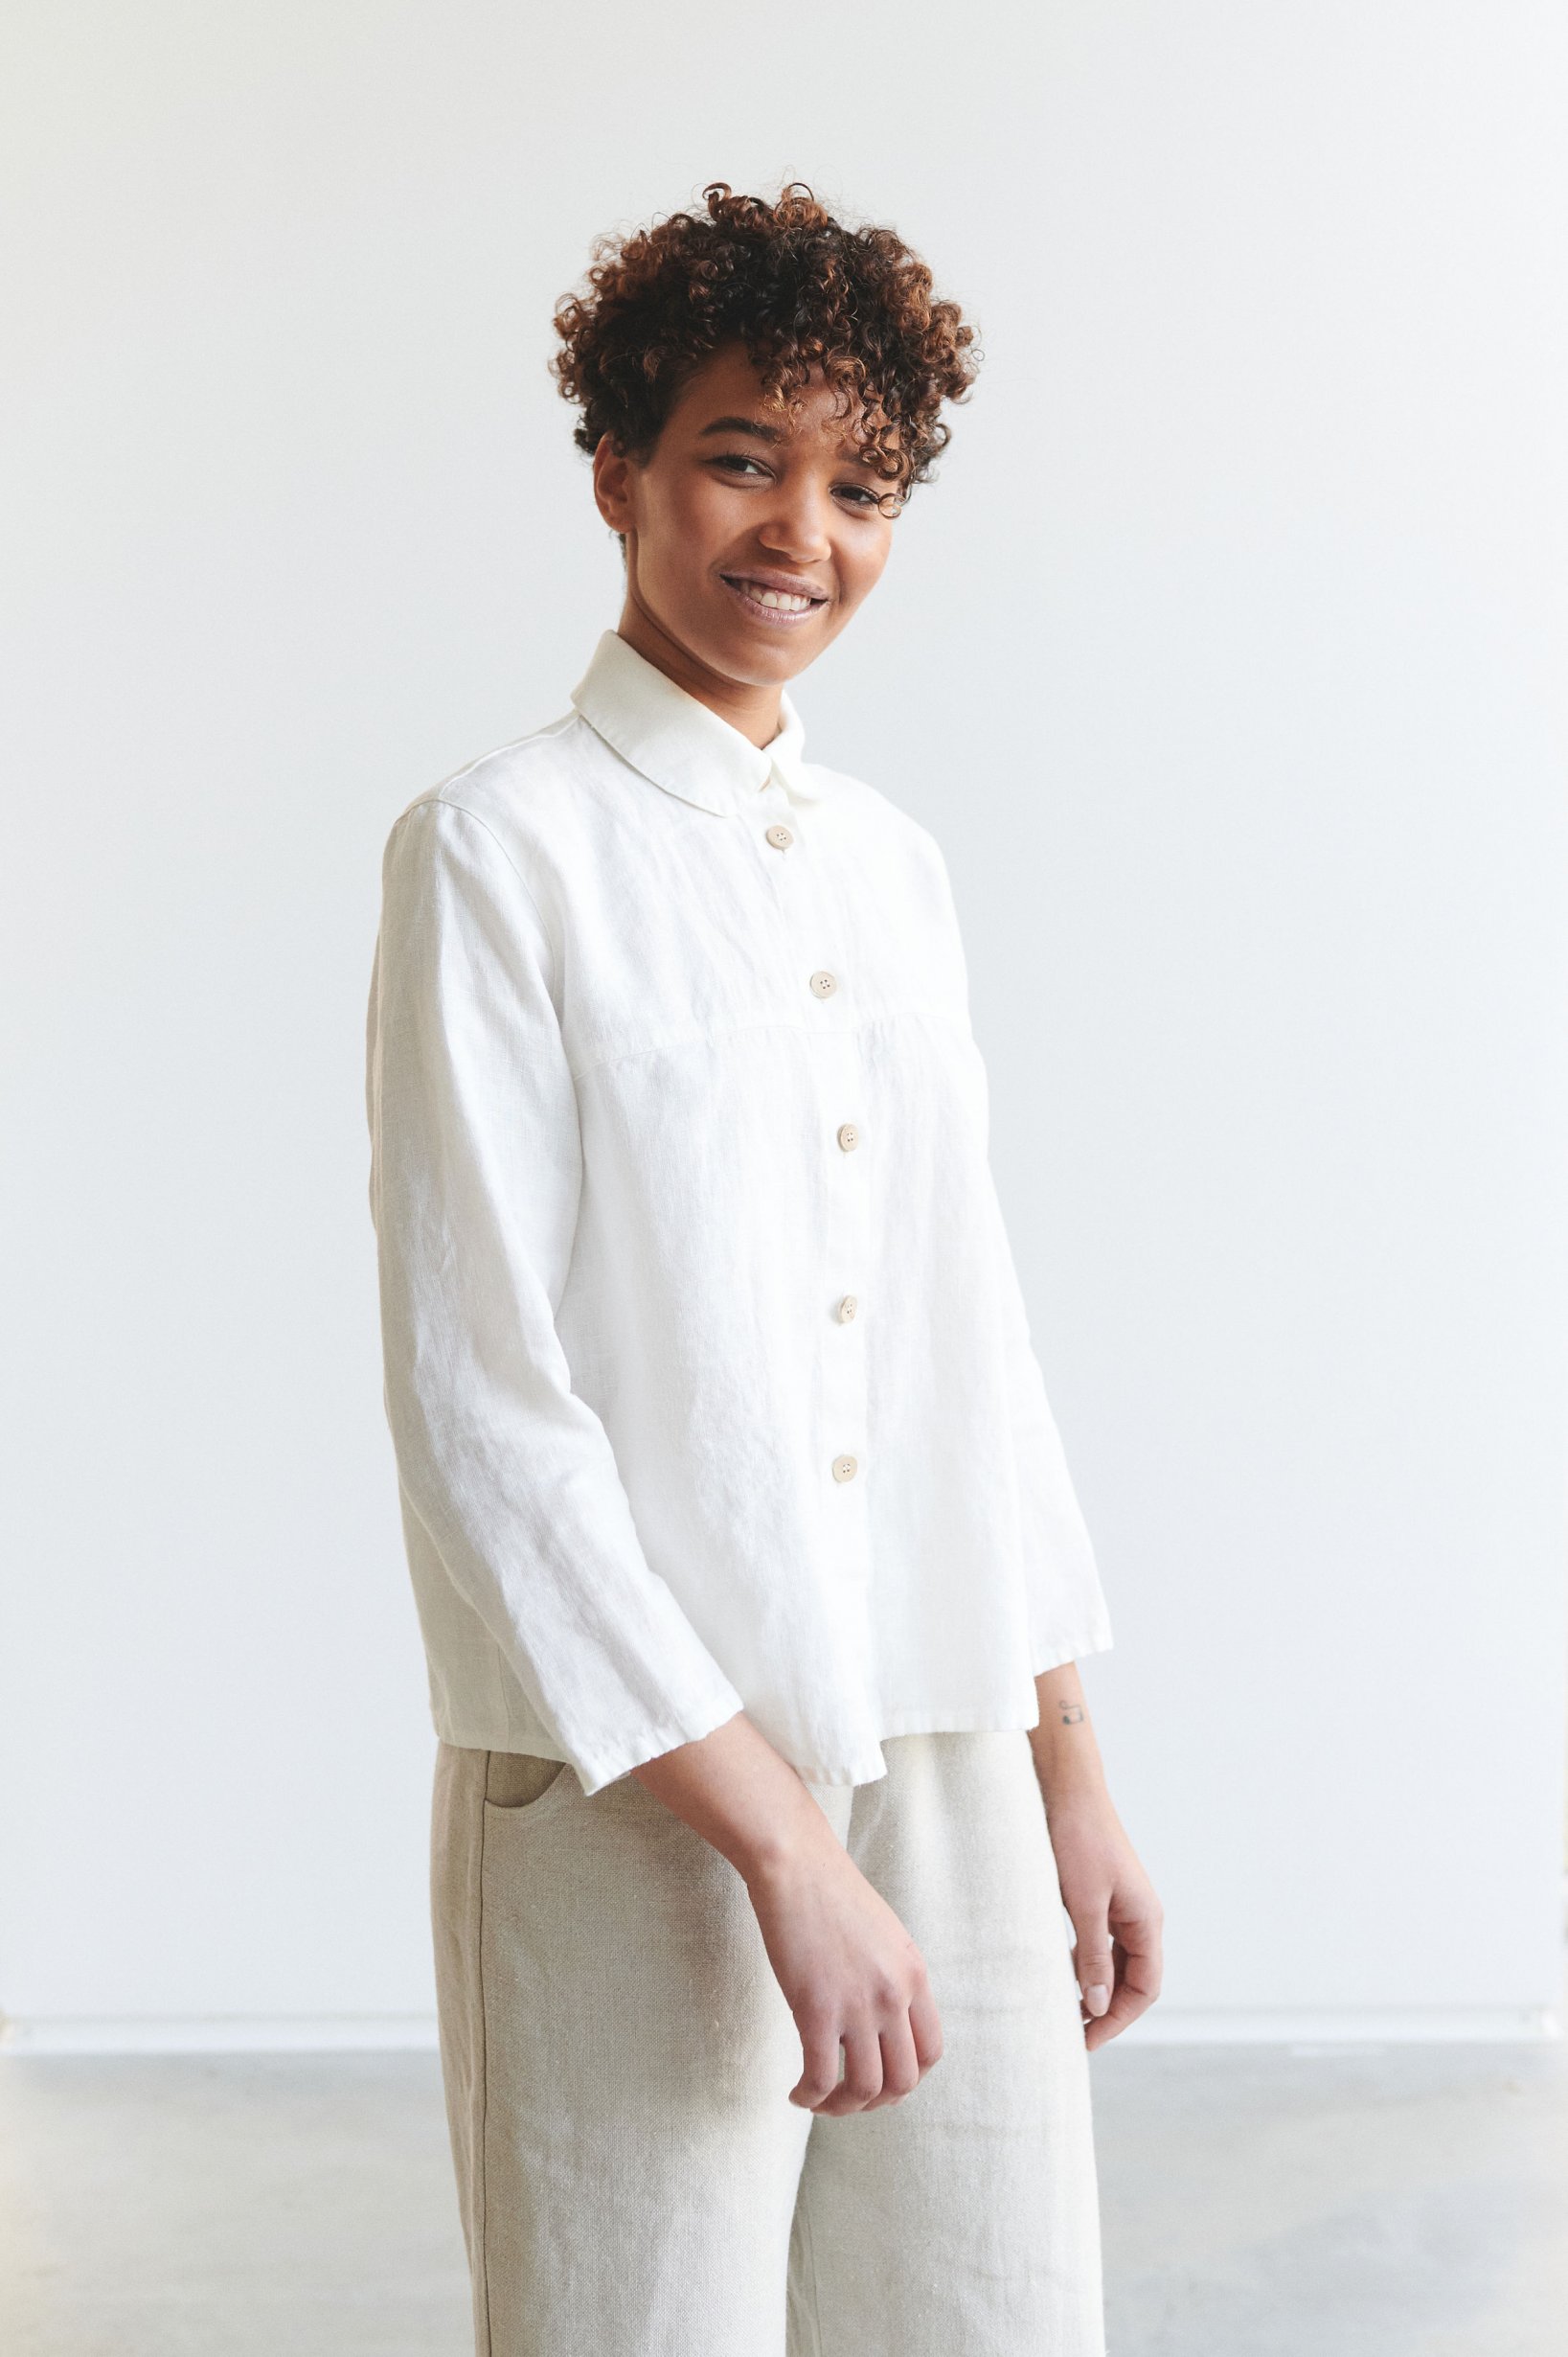 Model wearing white linen button down shirt